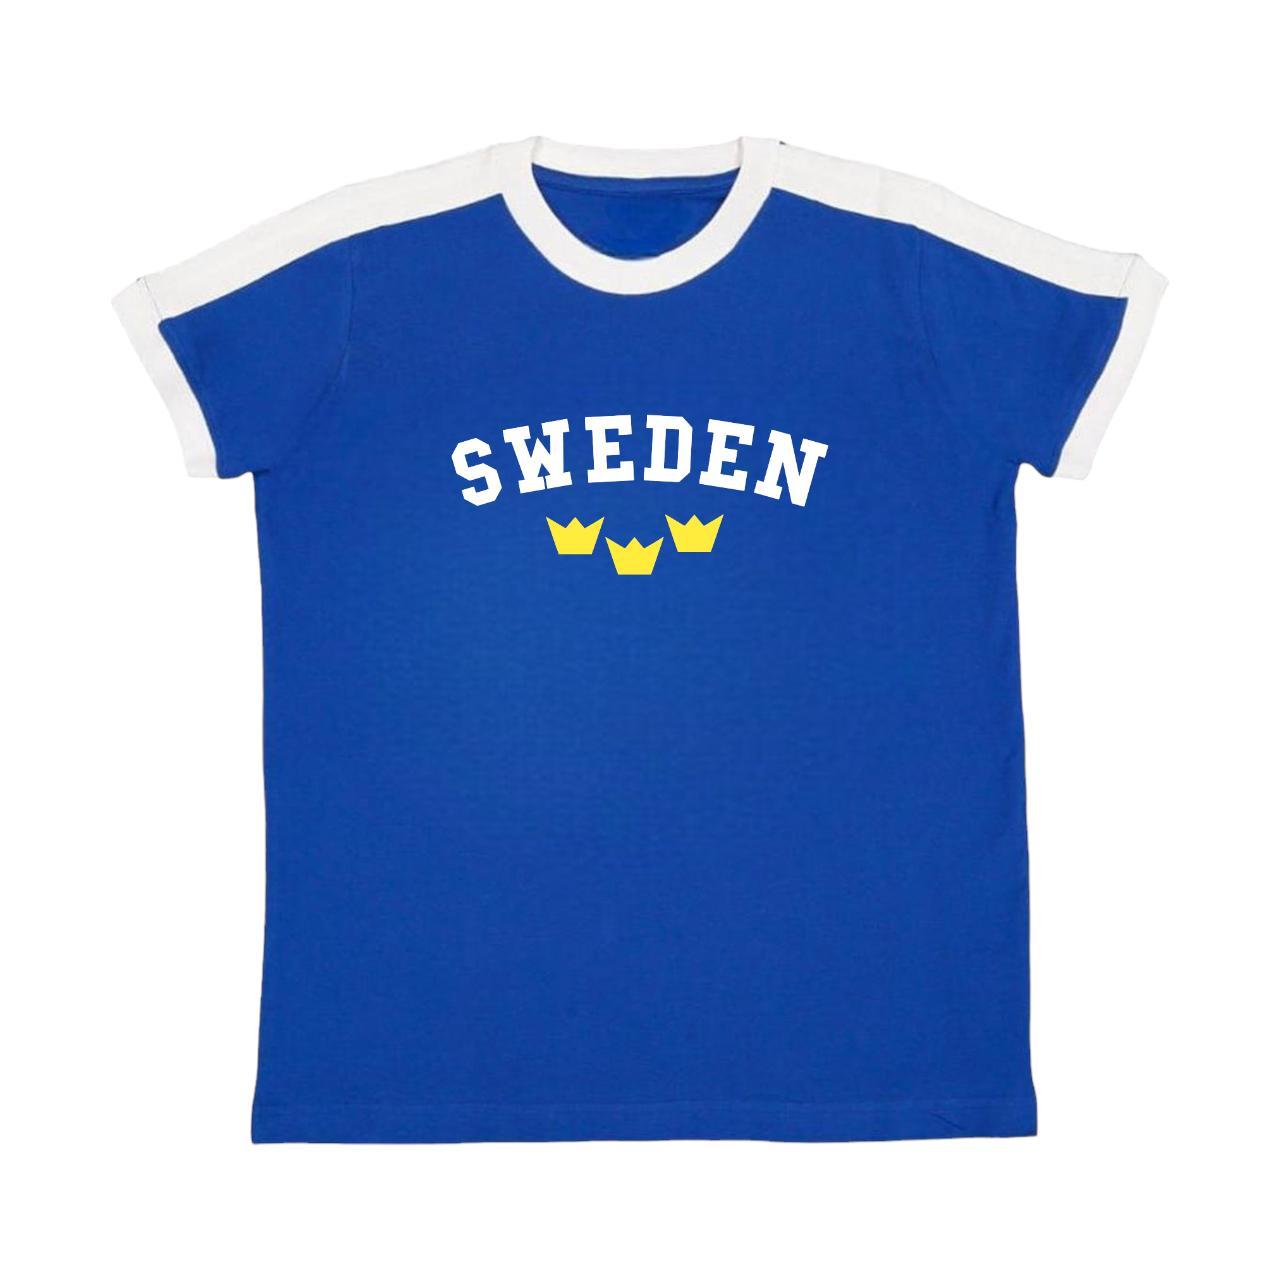 Sweden Baby Tee Blue ringer t shirt with white... - Depop